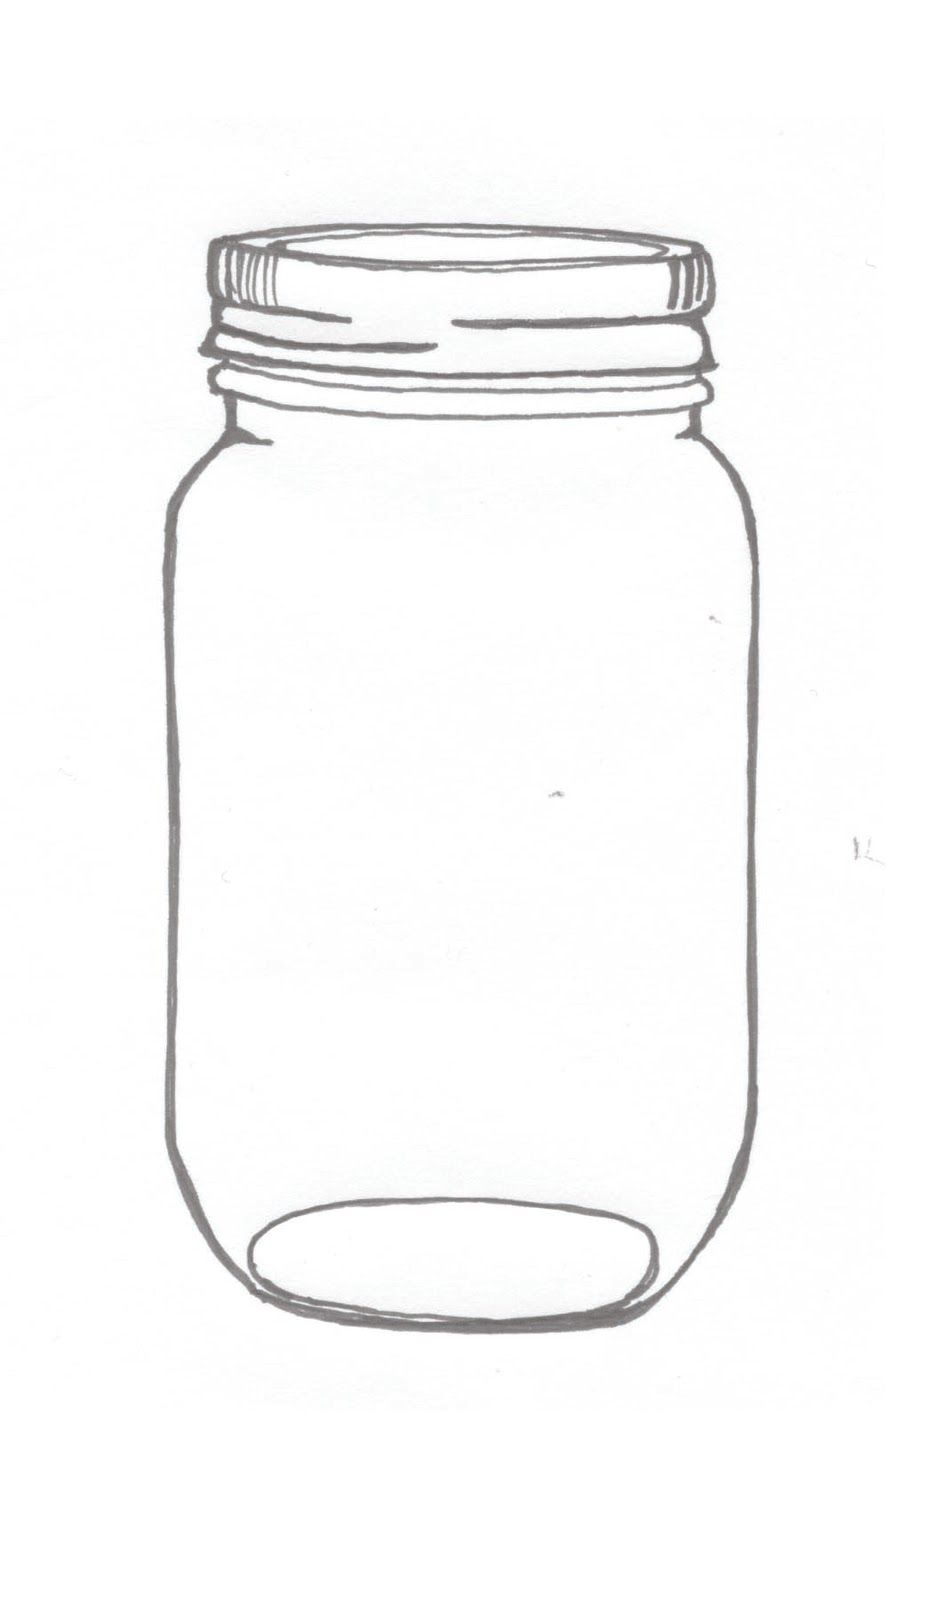 jar clipart sketch